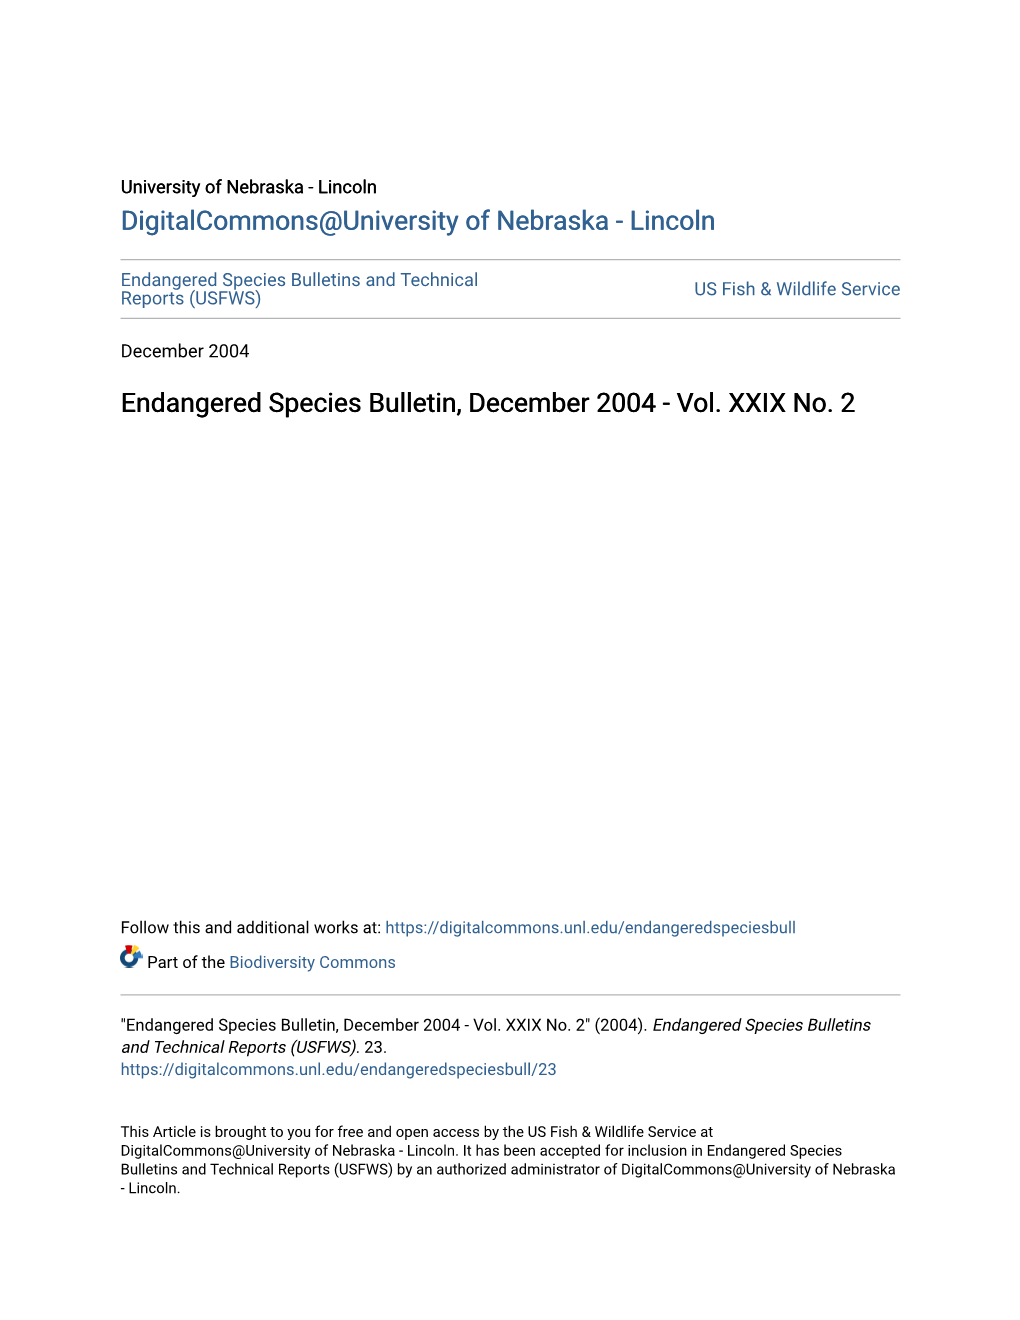 Endangered Species Bulletin, December 2004 - Vol